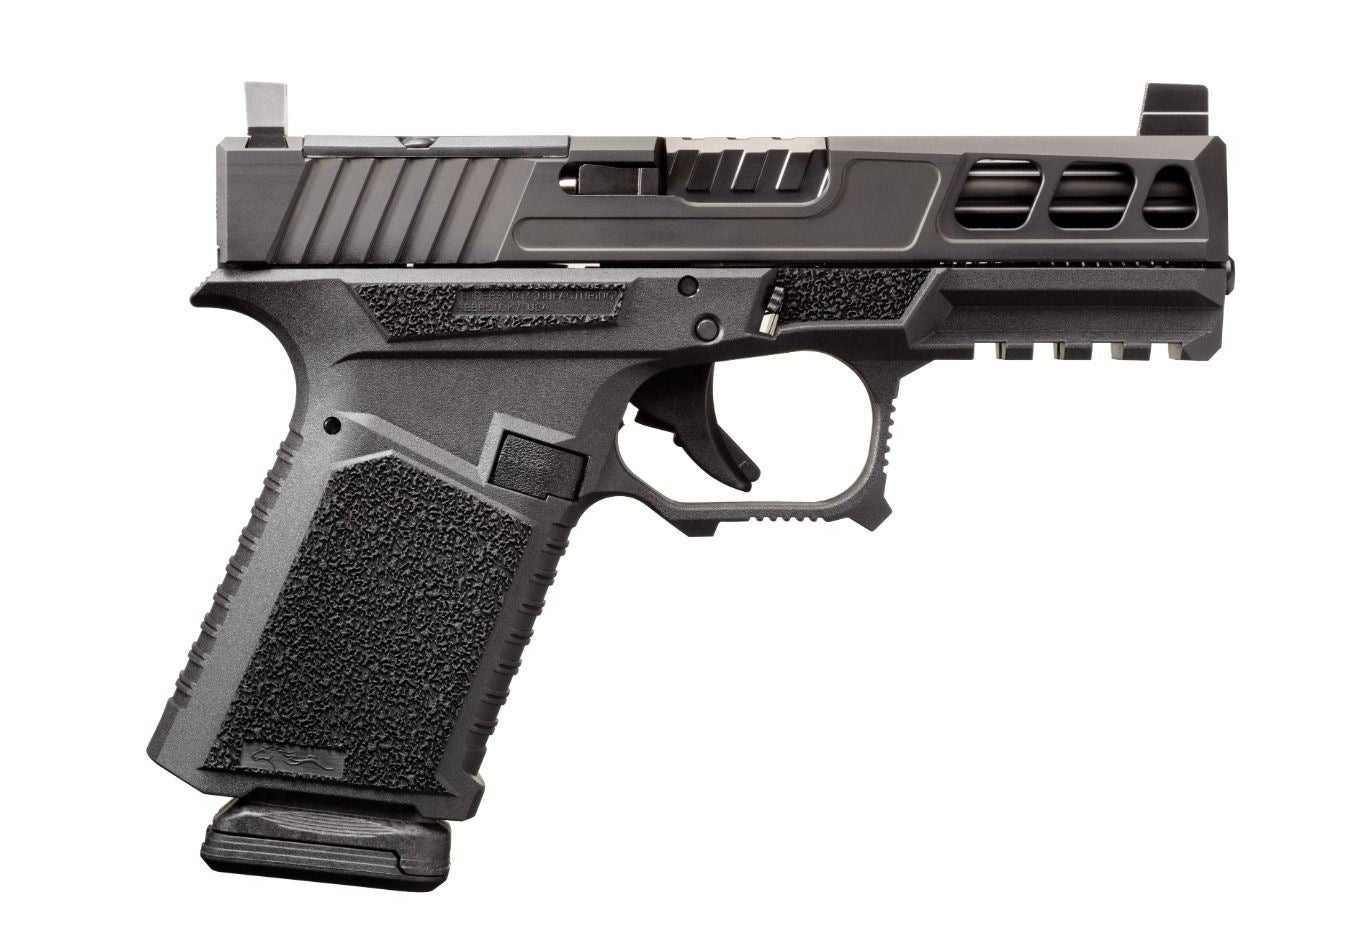 Anderson Manufacturing Kiger-9c PRO Pistol (2)